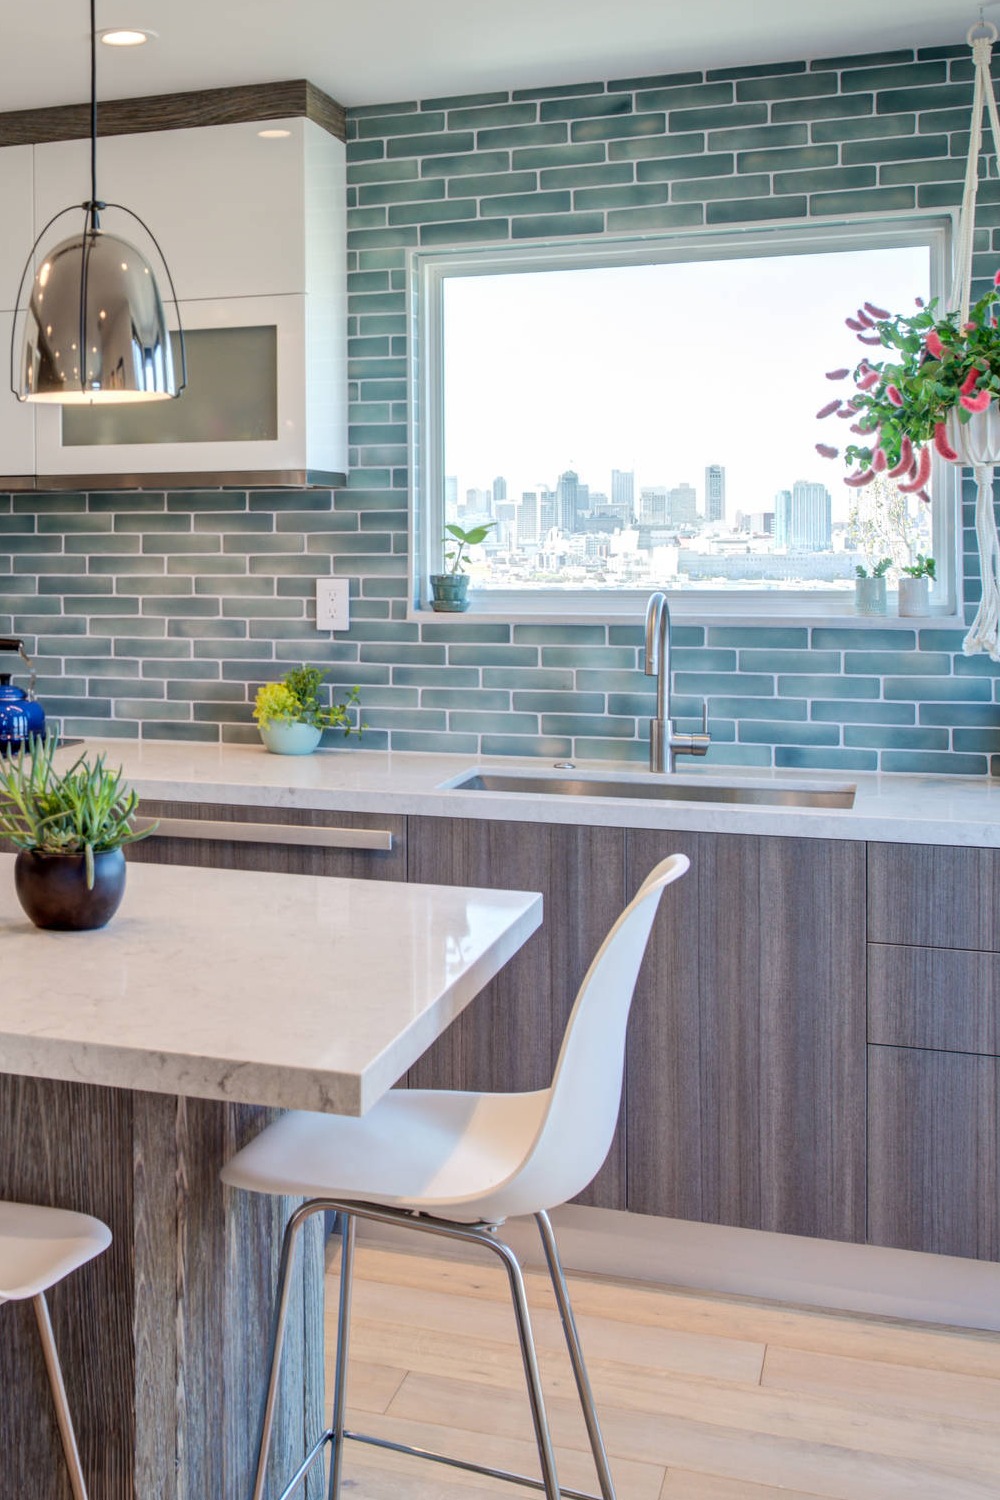 White Countertops Beach Style Kitchen Island Backsplash Color Blue Backsplash Ideas Interior Design Style Create Tiles